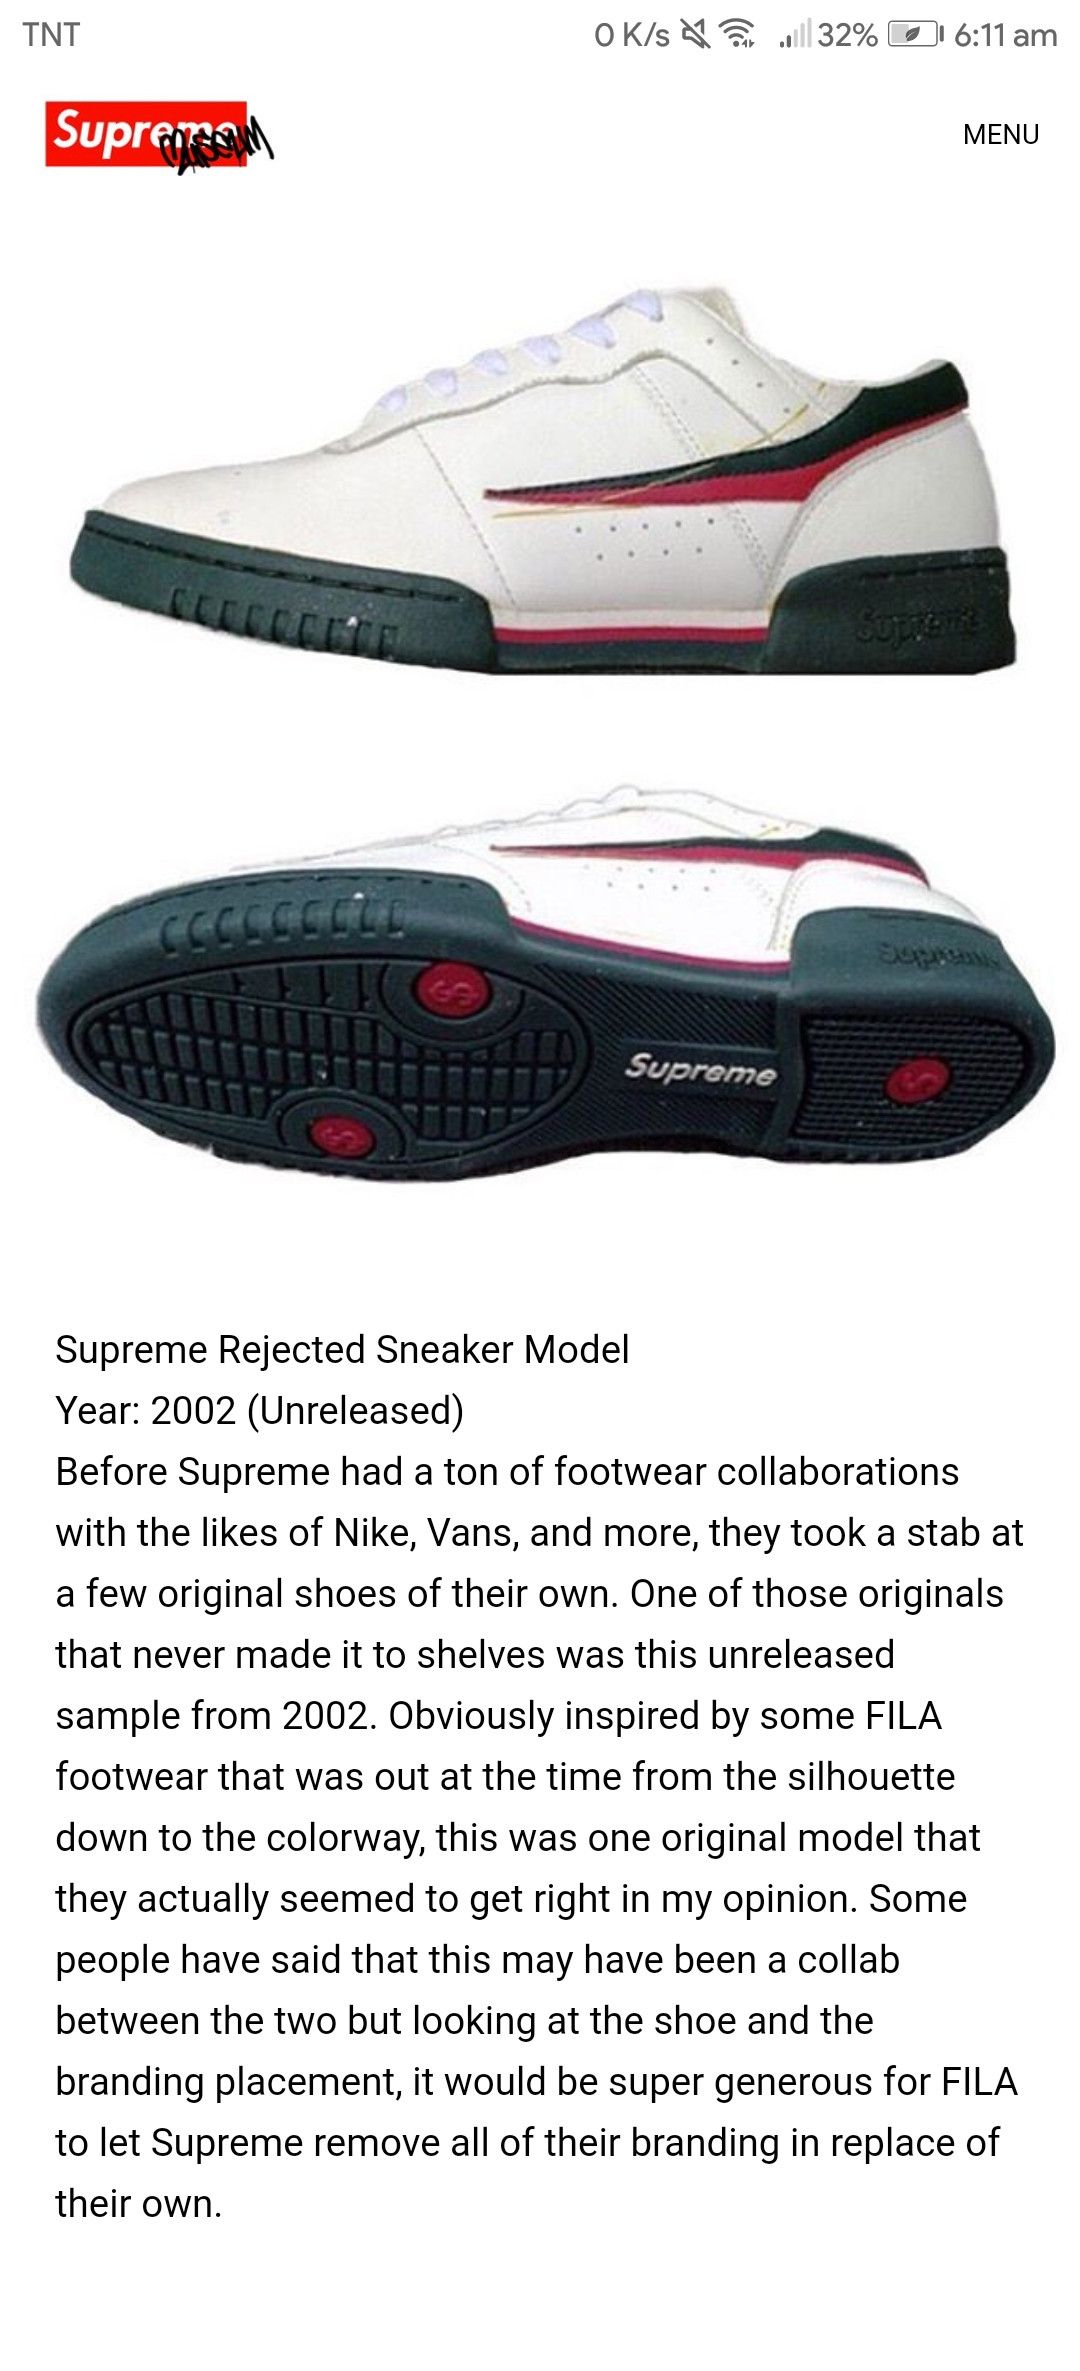 2002 Supreme Rejected Sneaker (Unreleased) - 10